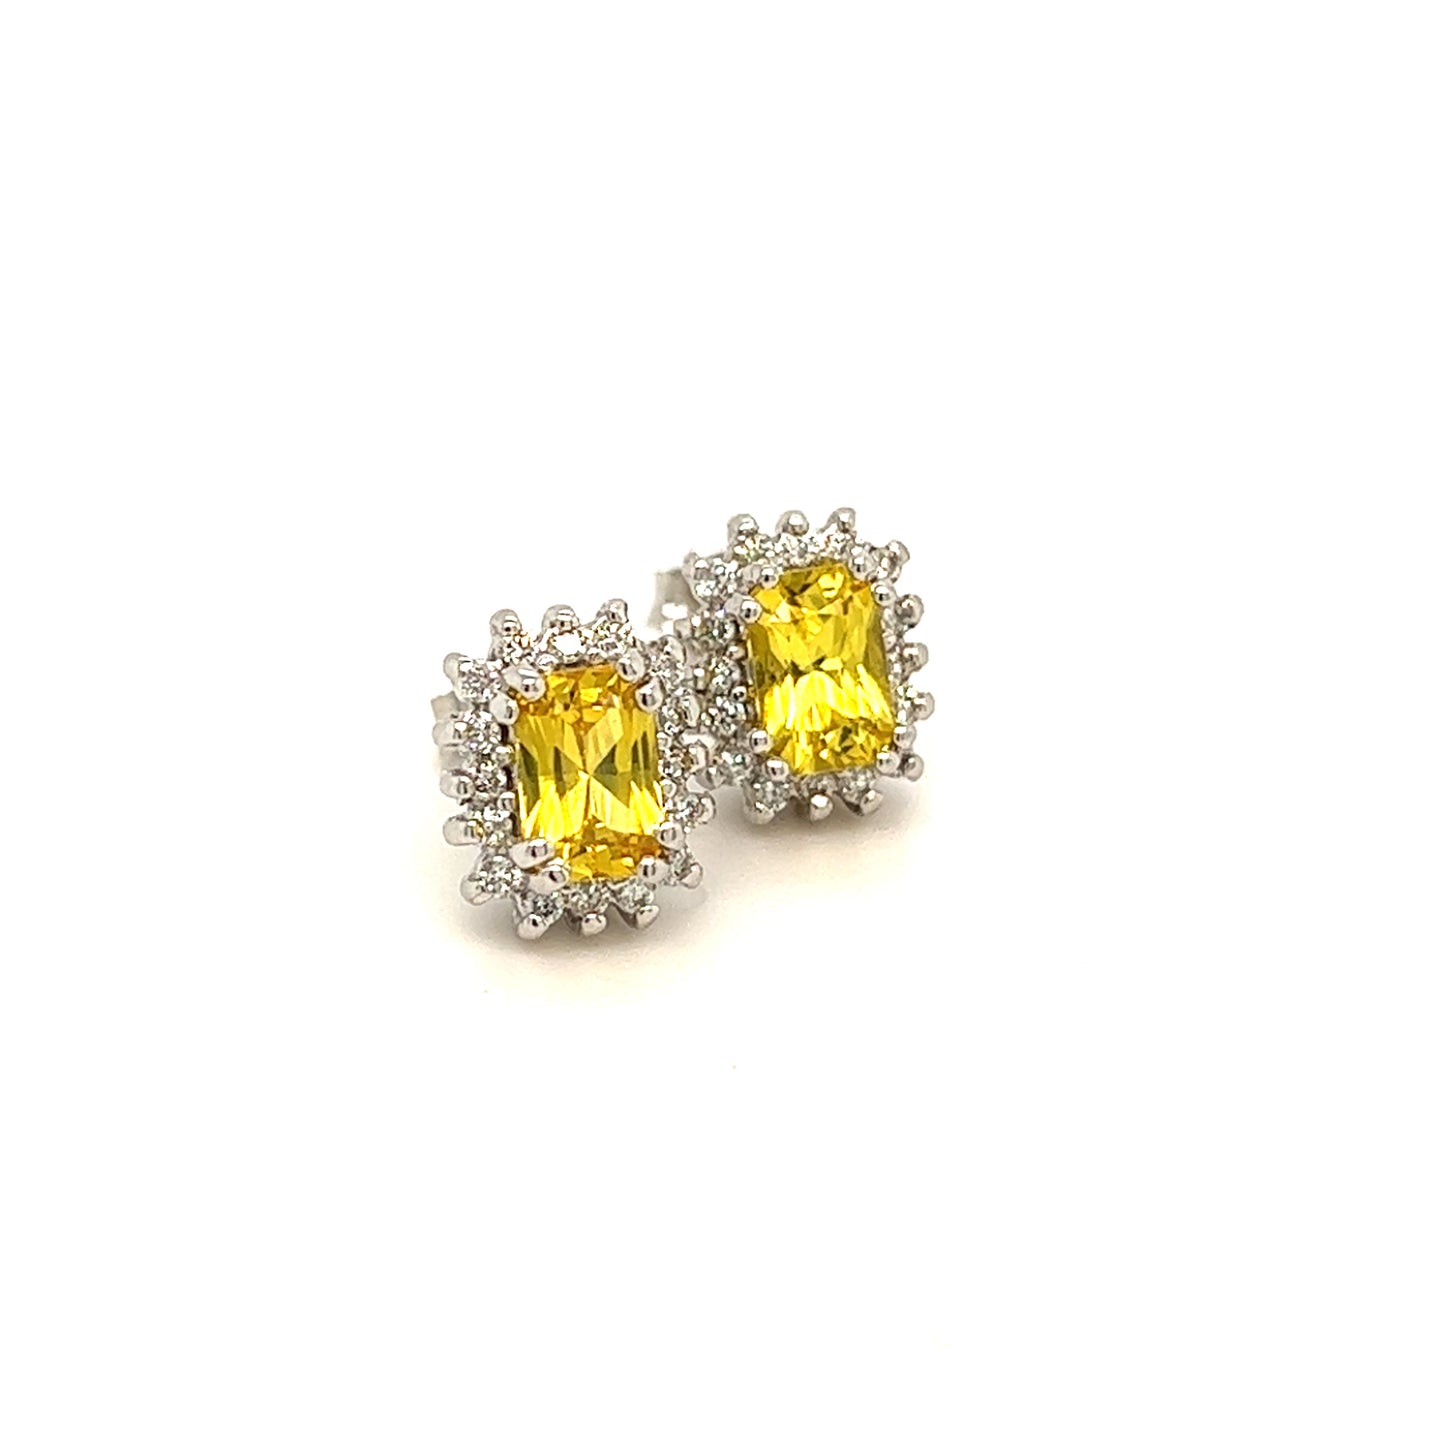 Natural Sapphire Diamond Stud Earrings 14k W Gold 1.71 TCW Certified $2950 121262 - Certified Estate Jewelry